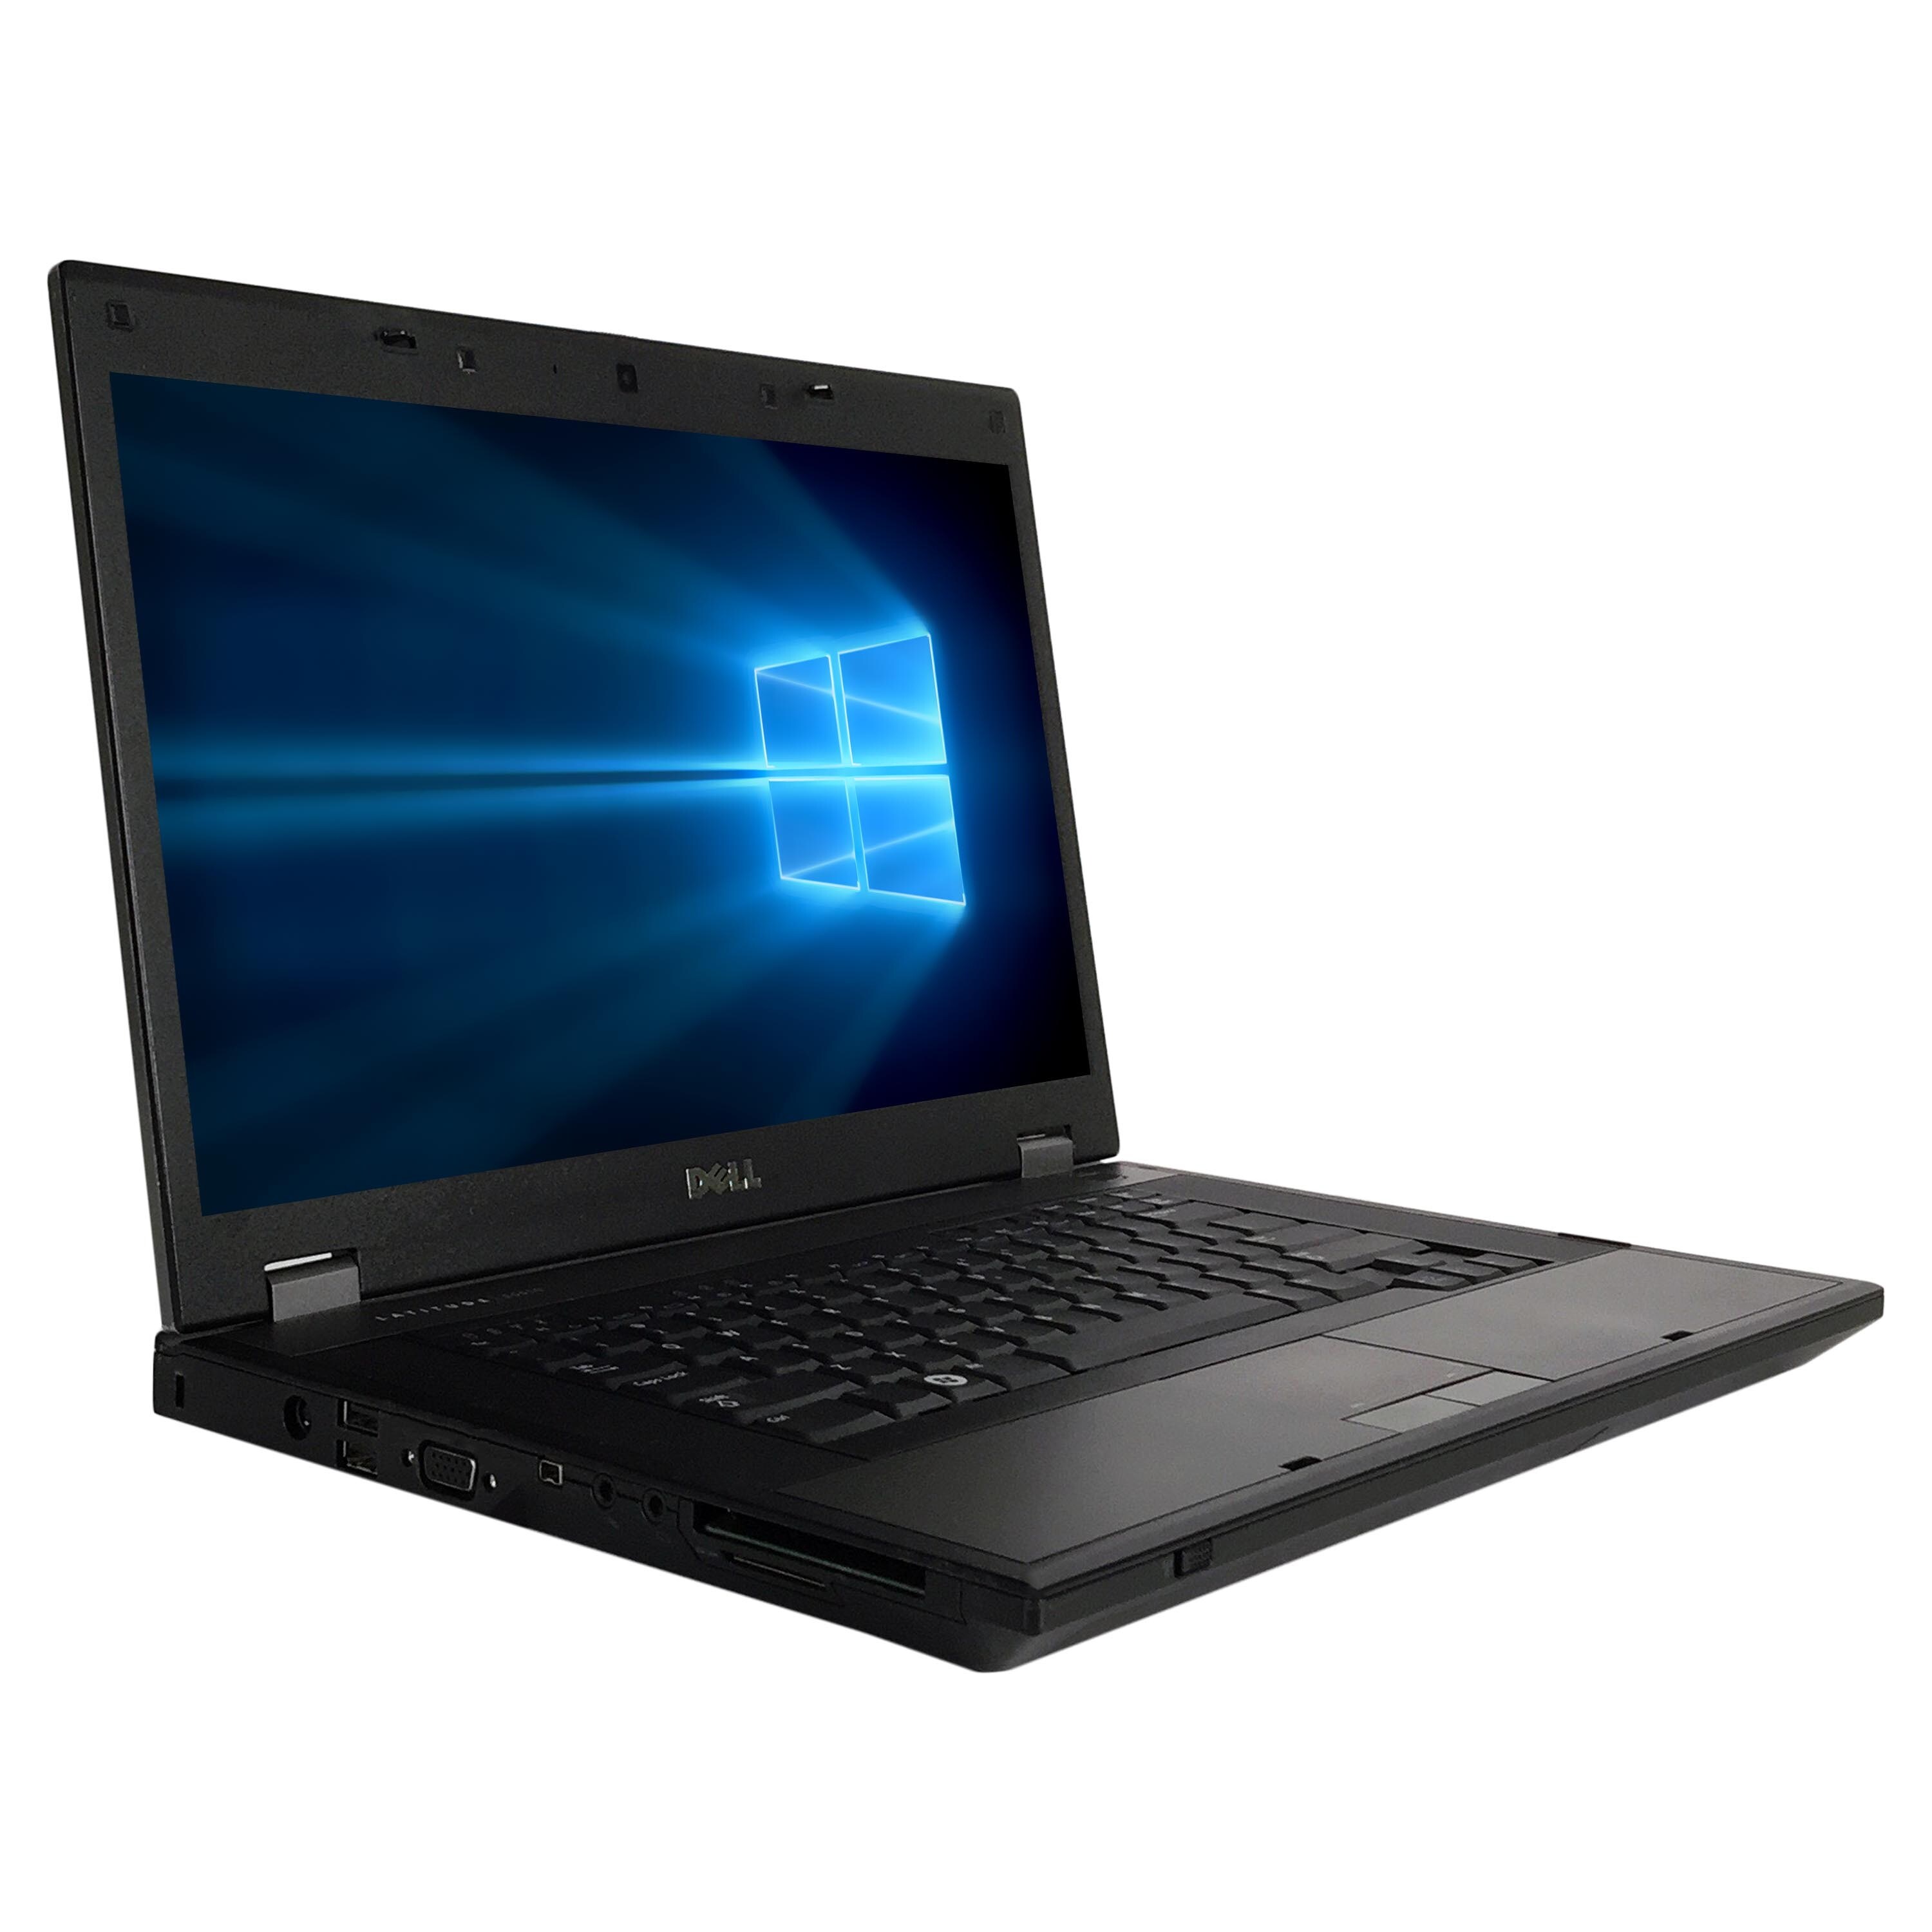 Shop Refurbished Laptop Dell Latitude E5510 15 6 Intel Core I3 350m 2 26ghz 4gb Ddr3 1gb Ssd Windows 10 Pro 1 Year Warranty Overstock